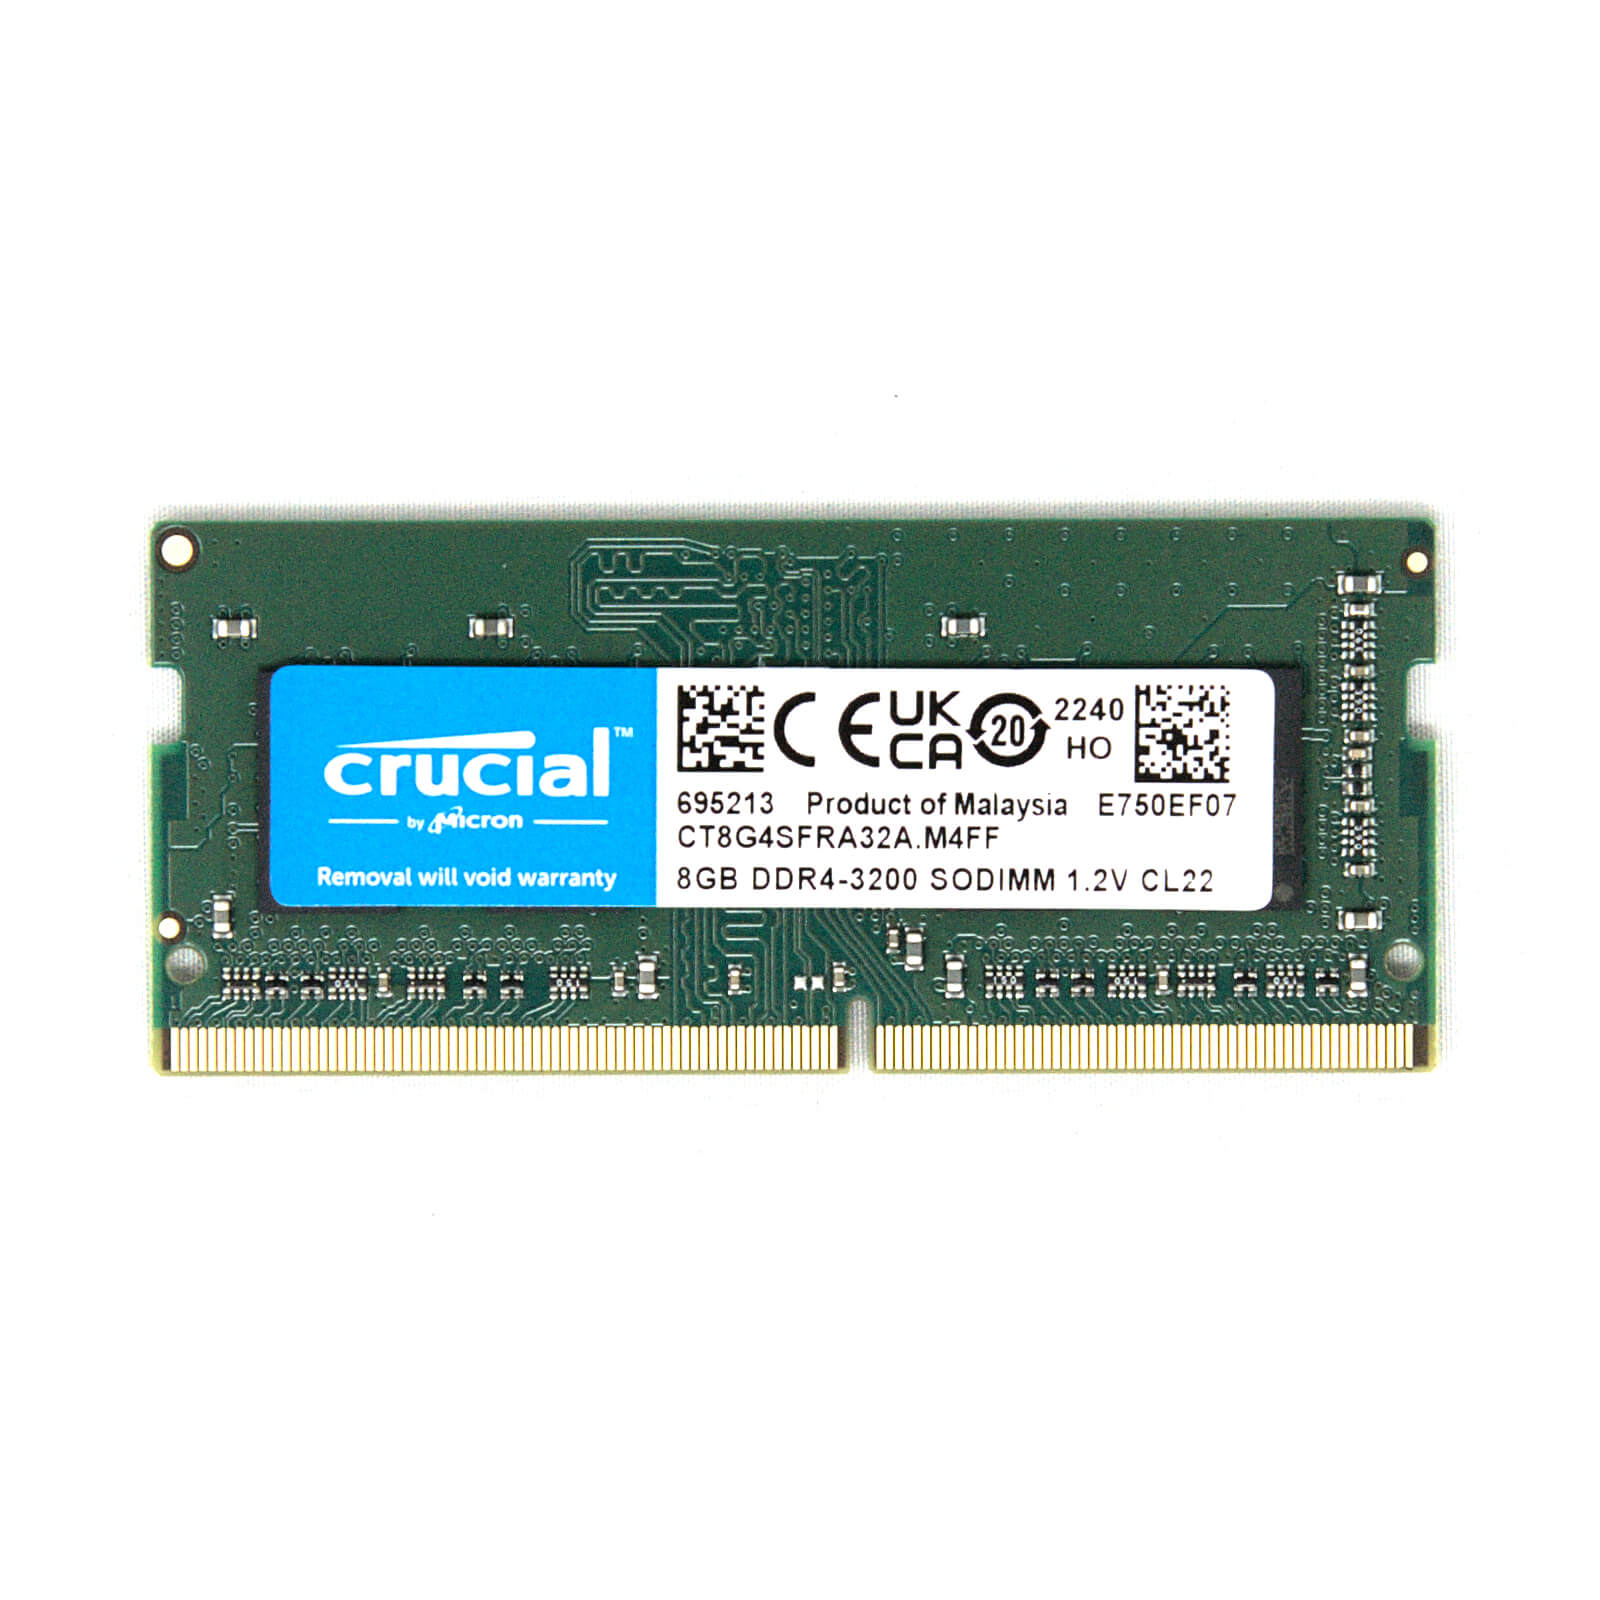 Crucial DDR4-3200 SO-DIMM Memory Module - 8GB - Protectli